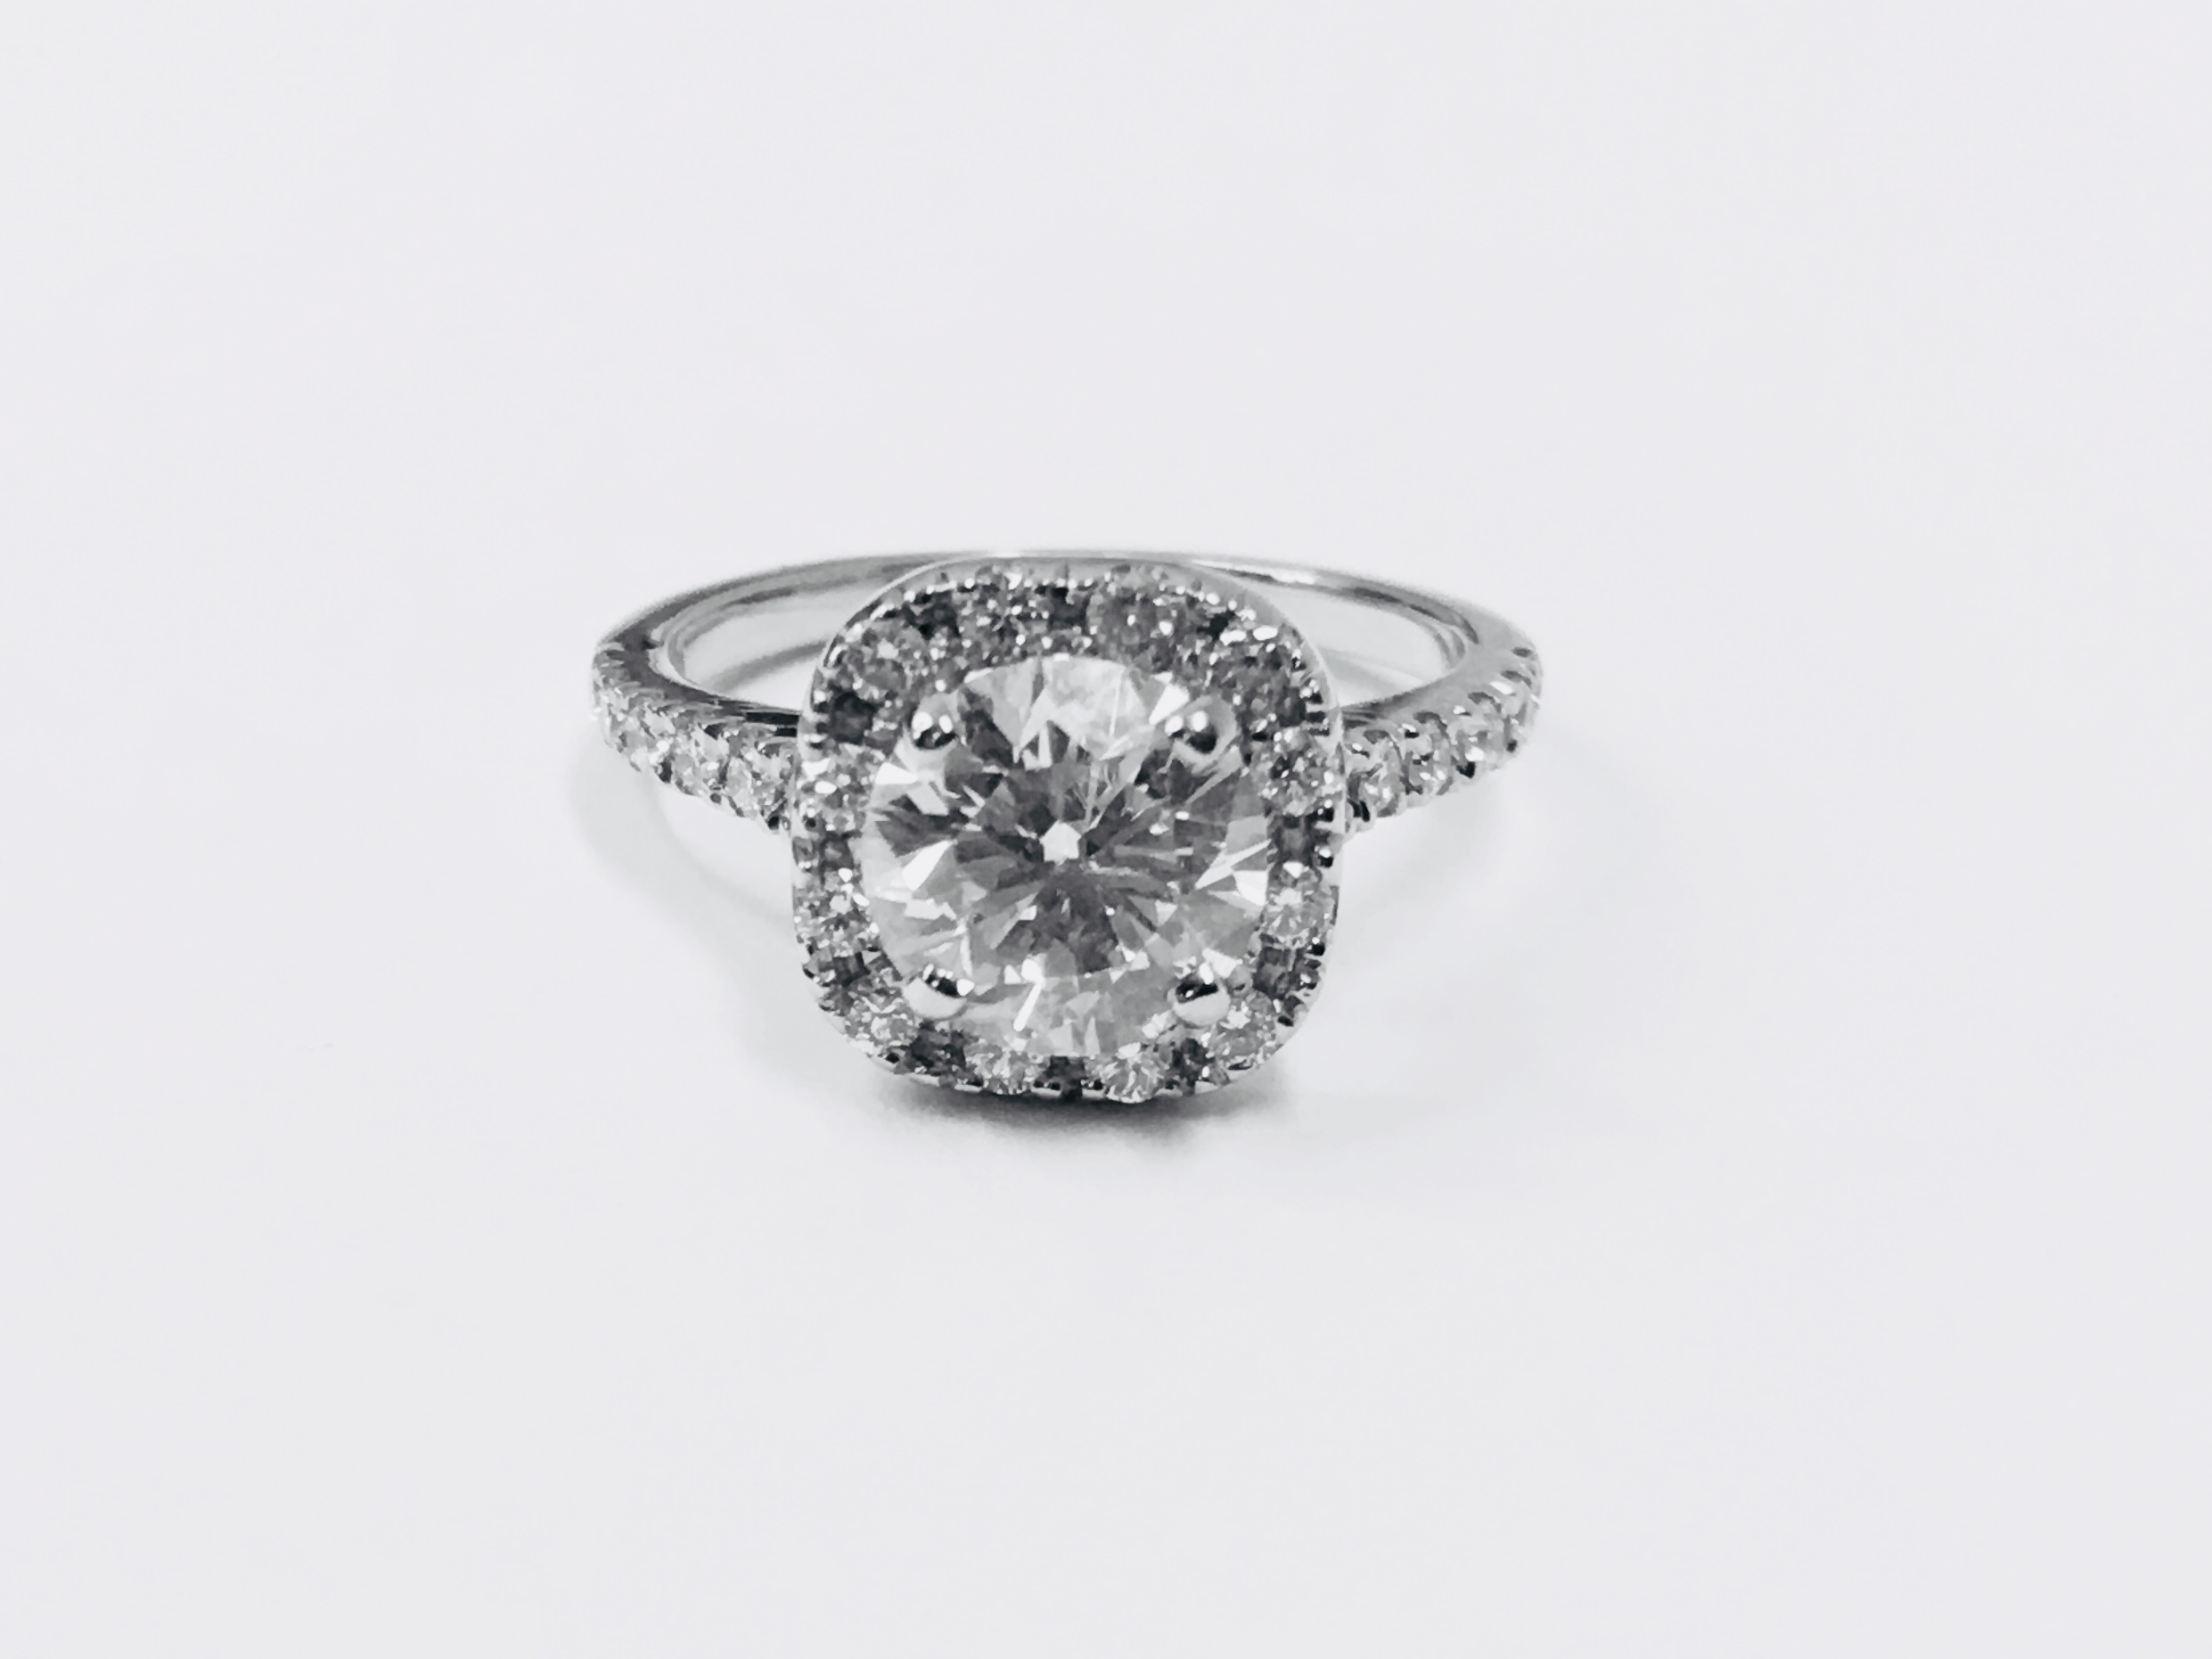 1.25ct diamond halo ring set in 18ct white gold - Image 11 of 24